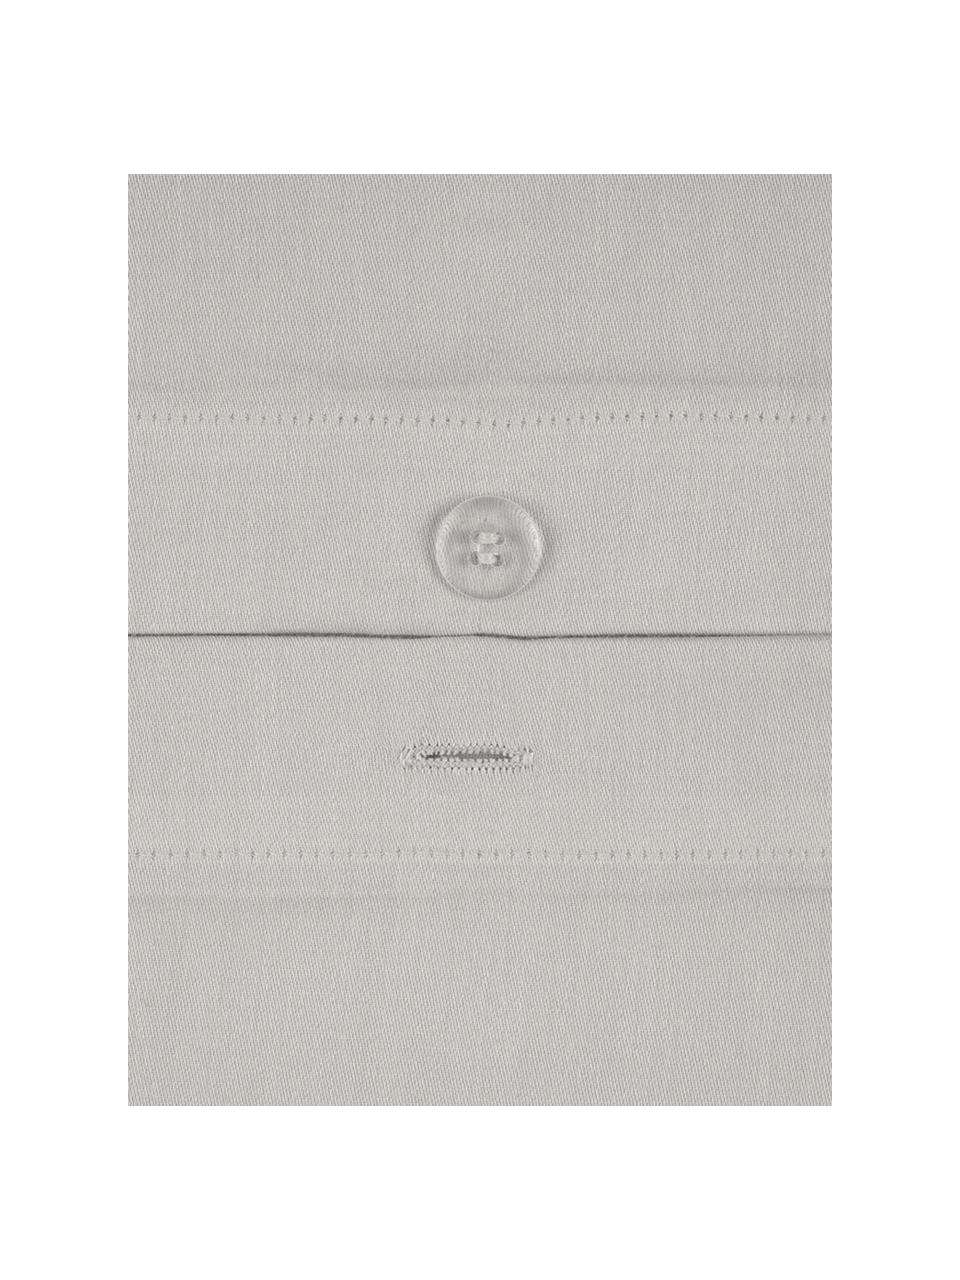 Baumwollsatin-Kissenbezug Comfort in Hellgrau, 50 x 70 cm, Webart: Satin, leicht glänzend Fa, Hellgrau, B 50 x L 70 cm